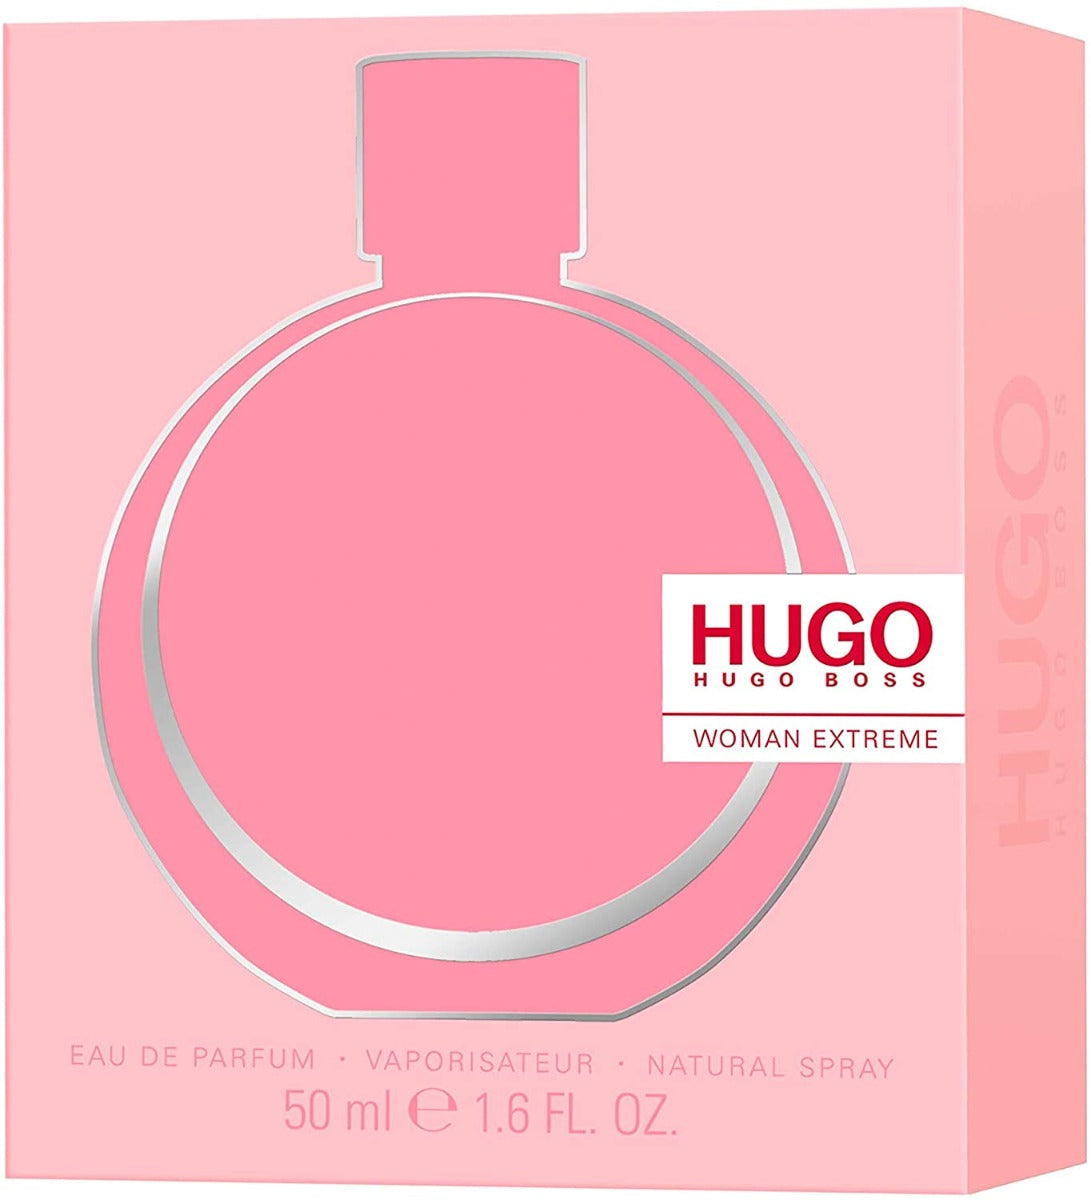 Hugo Boss Perfume  - Hugo Boss Hugo Woman Extreme - perfumes for women, 50 ml - EDP Spray - samawa perfumes 